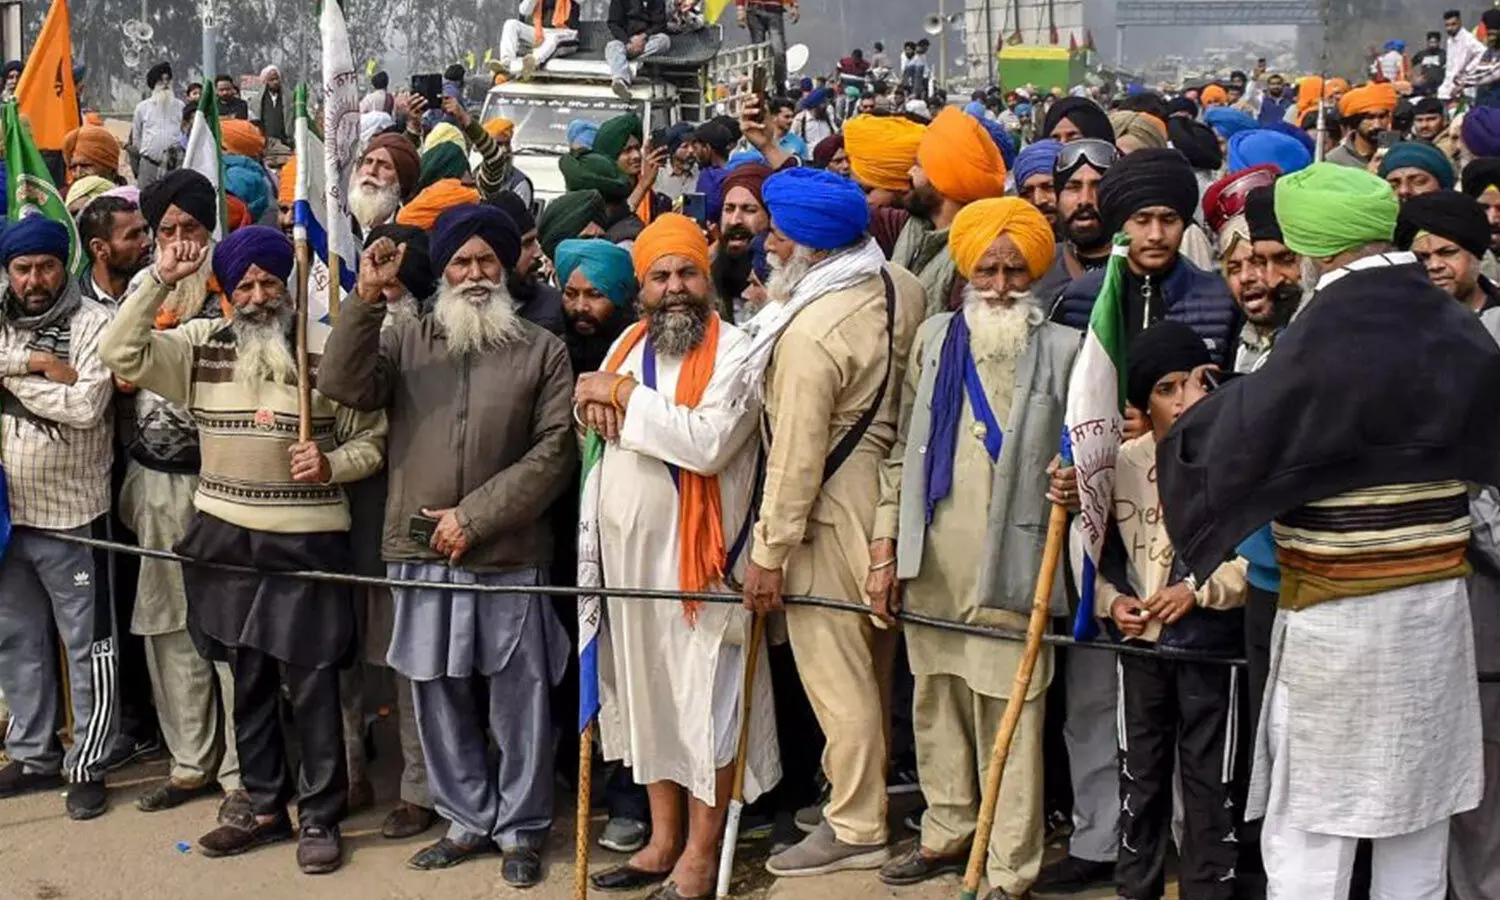 Latest News on Farmers Agitation: Farmers pause Delhi March